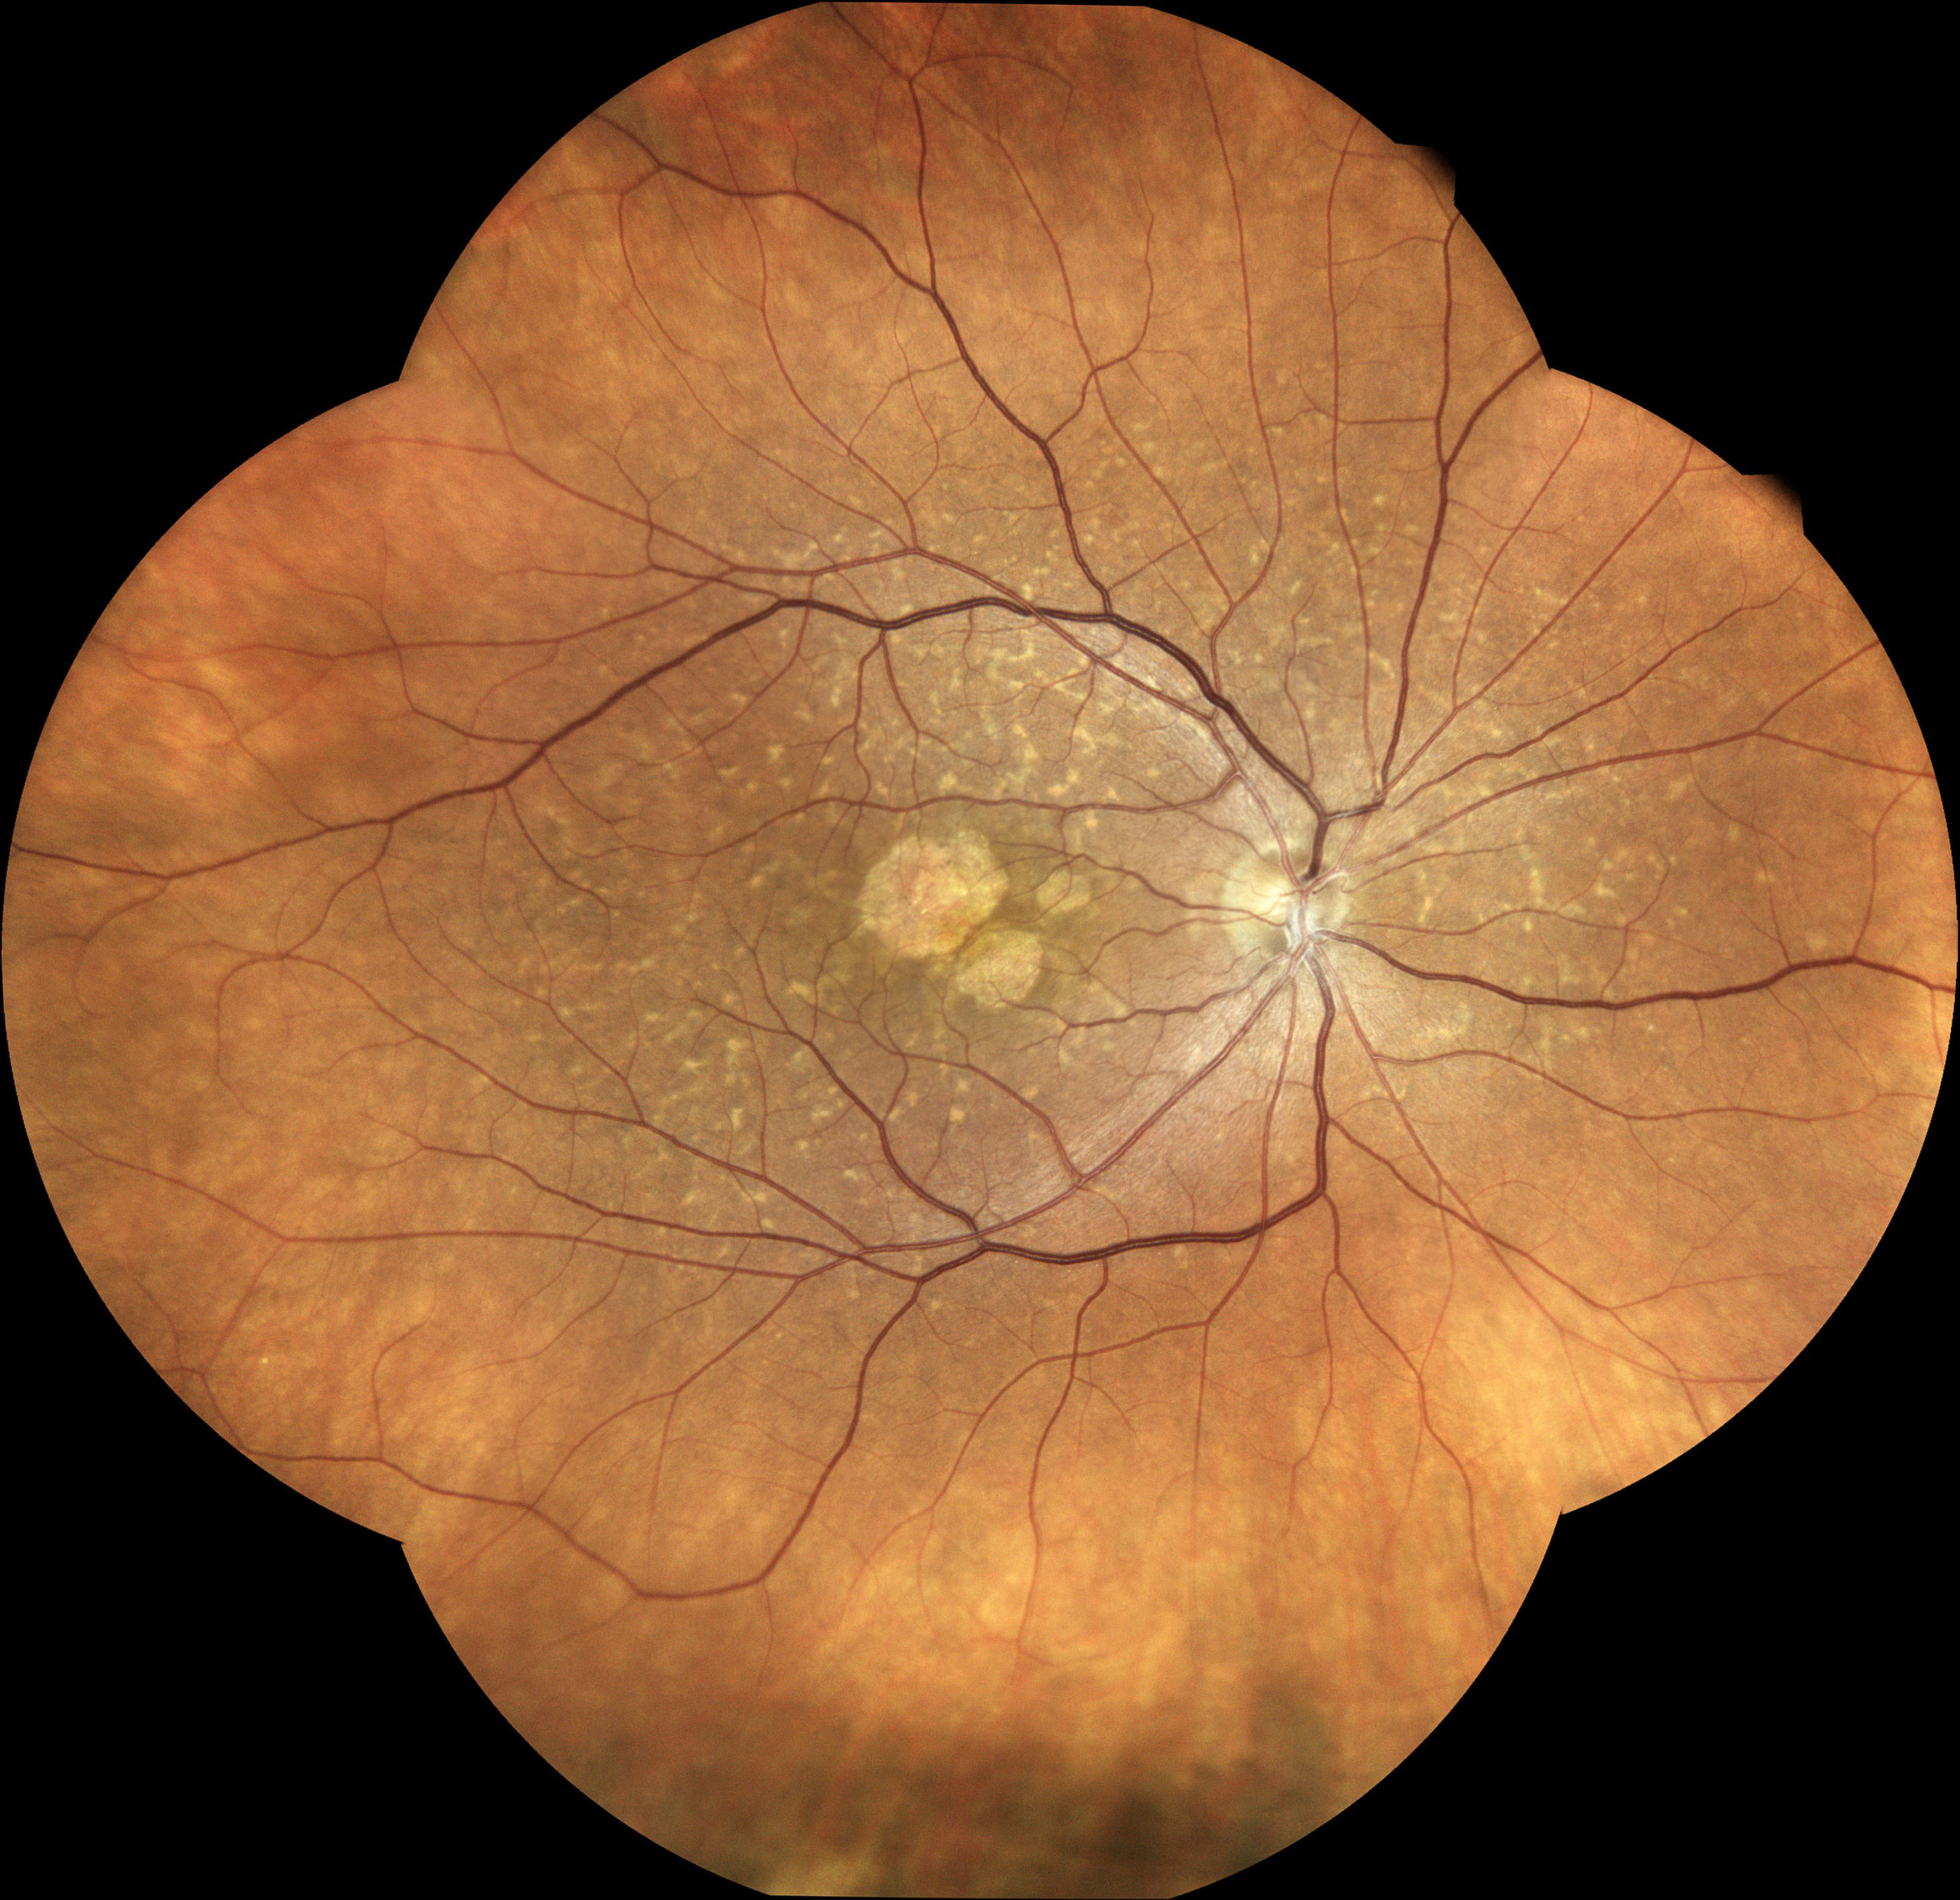 TrueColor mosaic retinal image of Stargardt disease